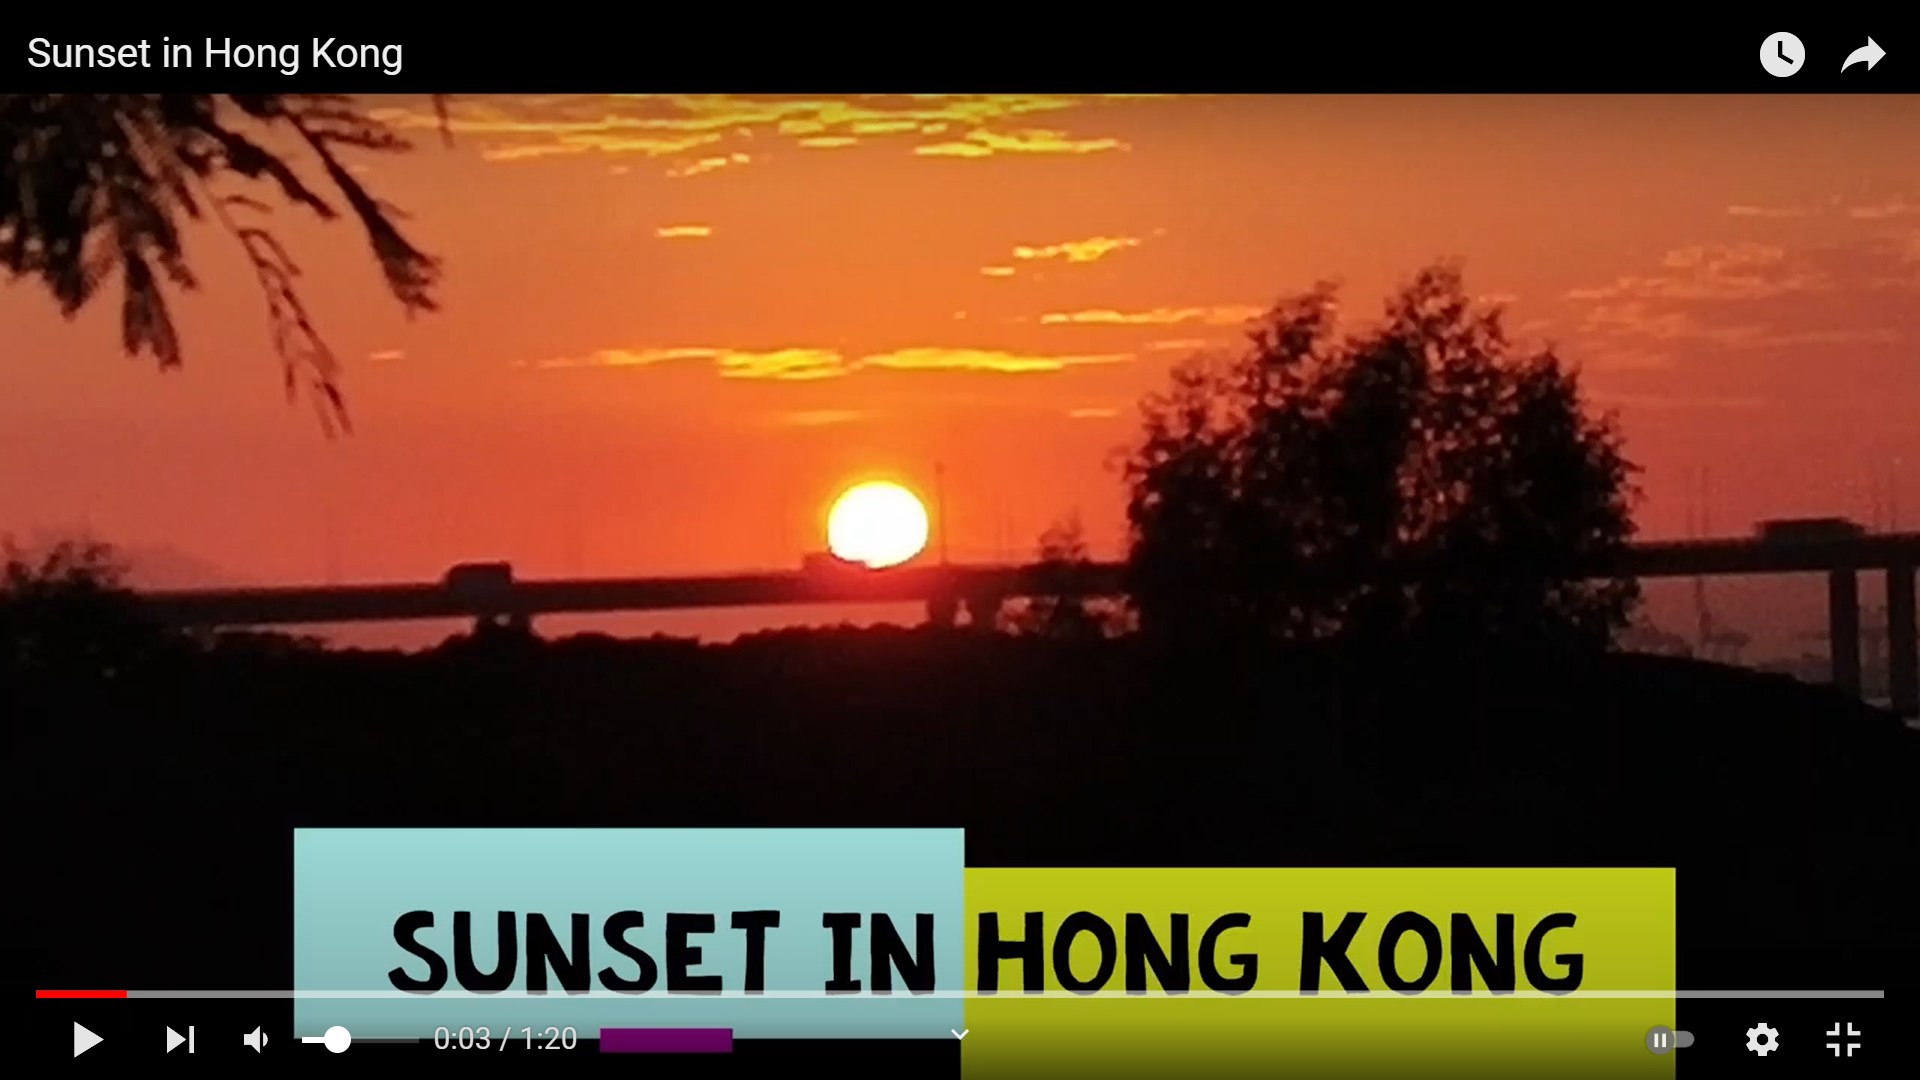 “Sunset in Hong Kong” snapshots video of Frank